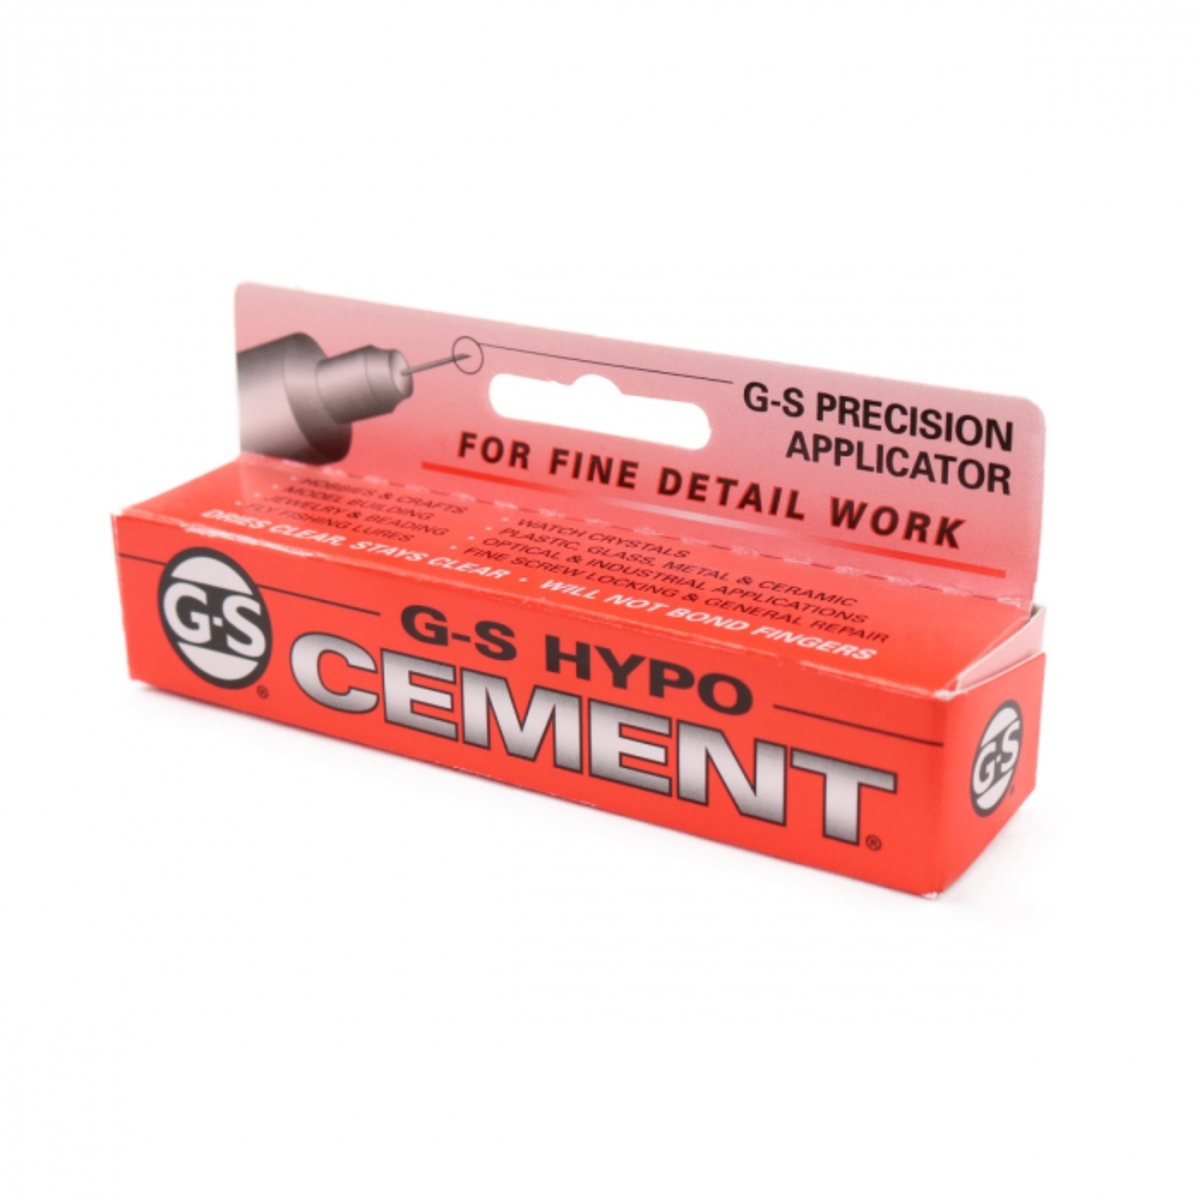 GS Hypo Cement 